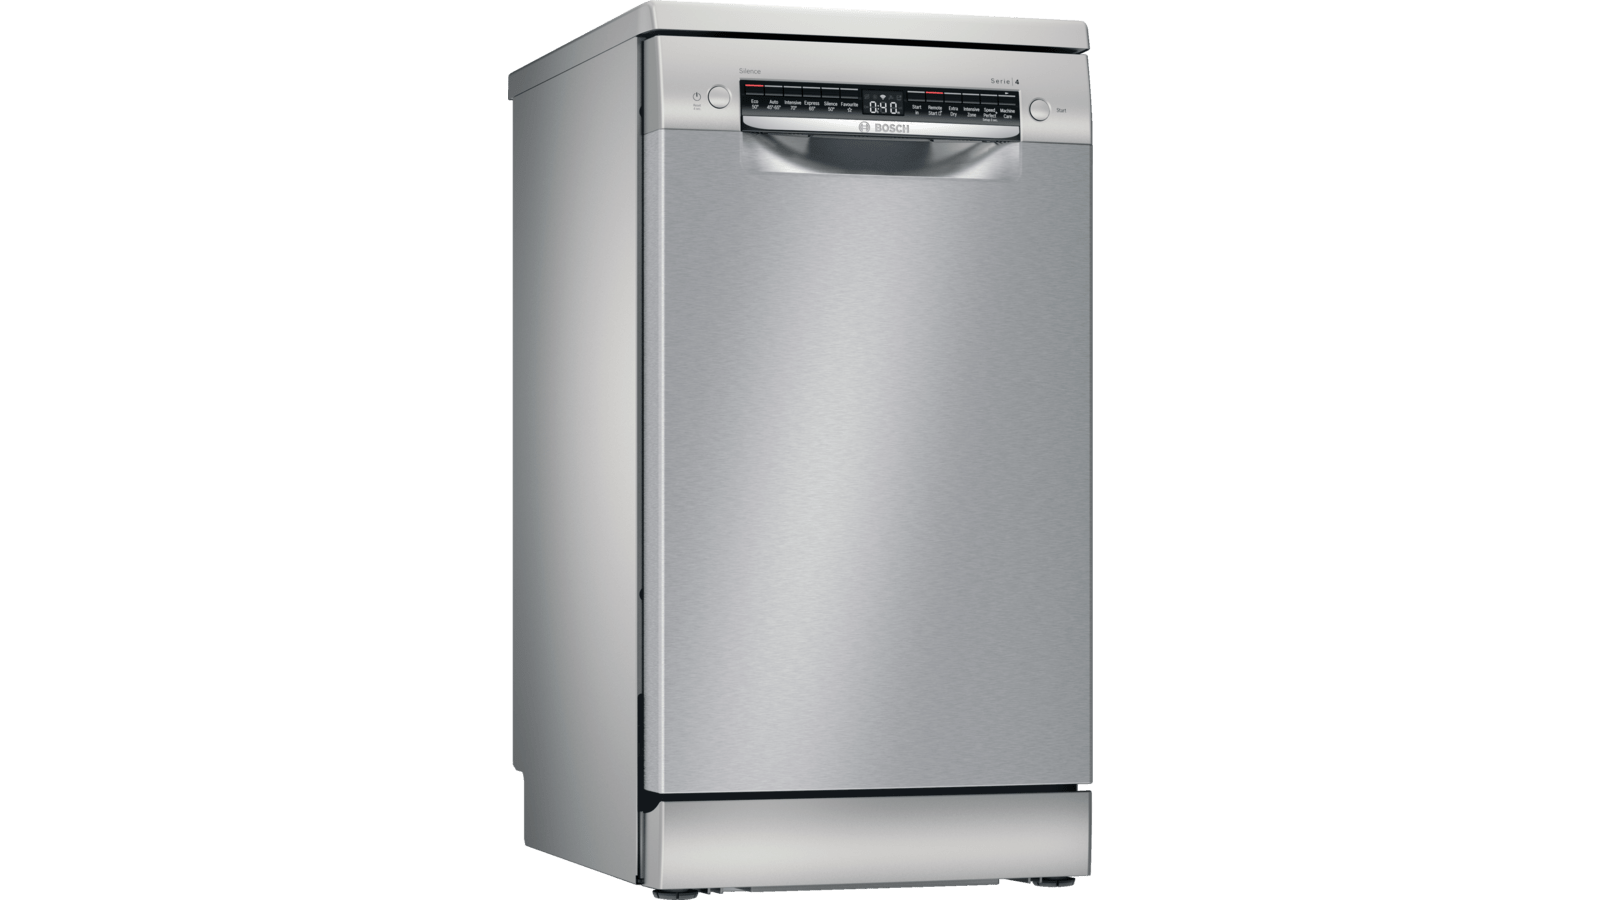 Bosch Sps4hki45g Free Standing Dishwasher